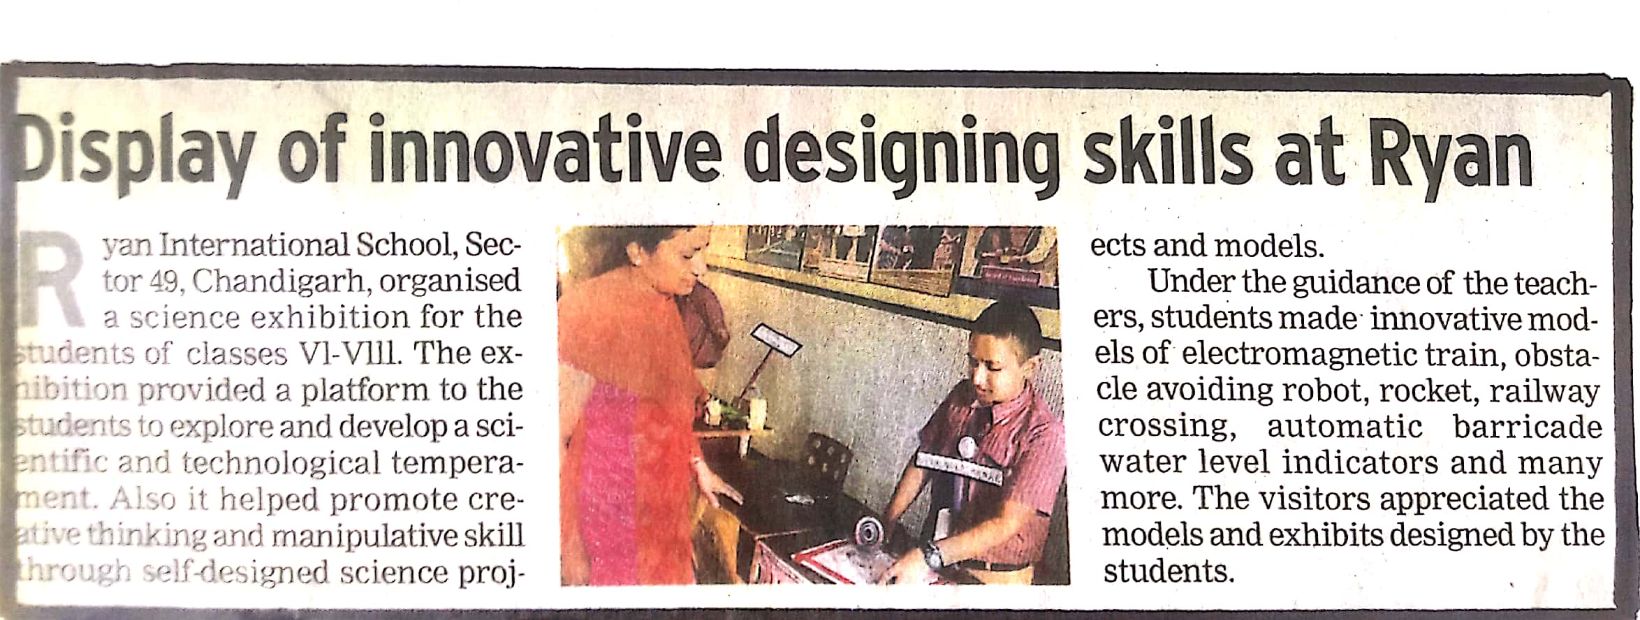 Science Exhibition was featured in The Tribune - Ryan International School, Chandigarh